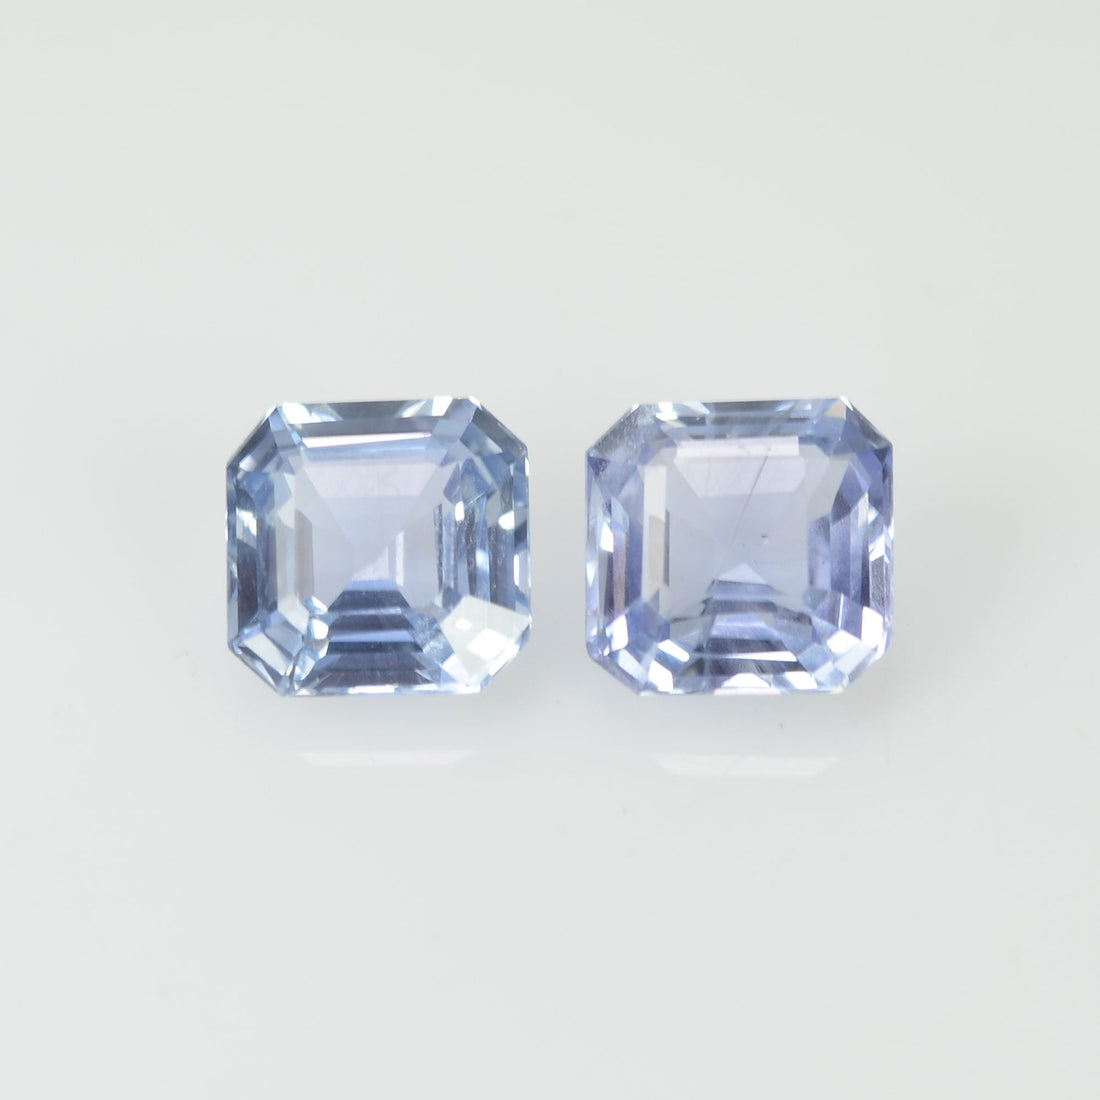 1.39 Cts  Natural Blue Sapphire Loose Pair Gemstone Octagon Cut - Thai Gems Export Ltd.